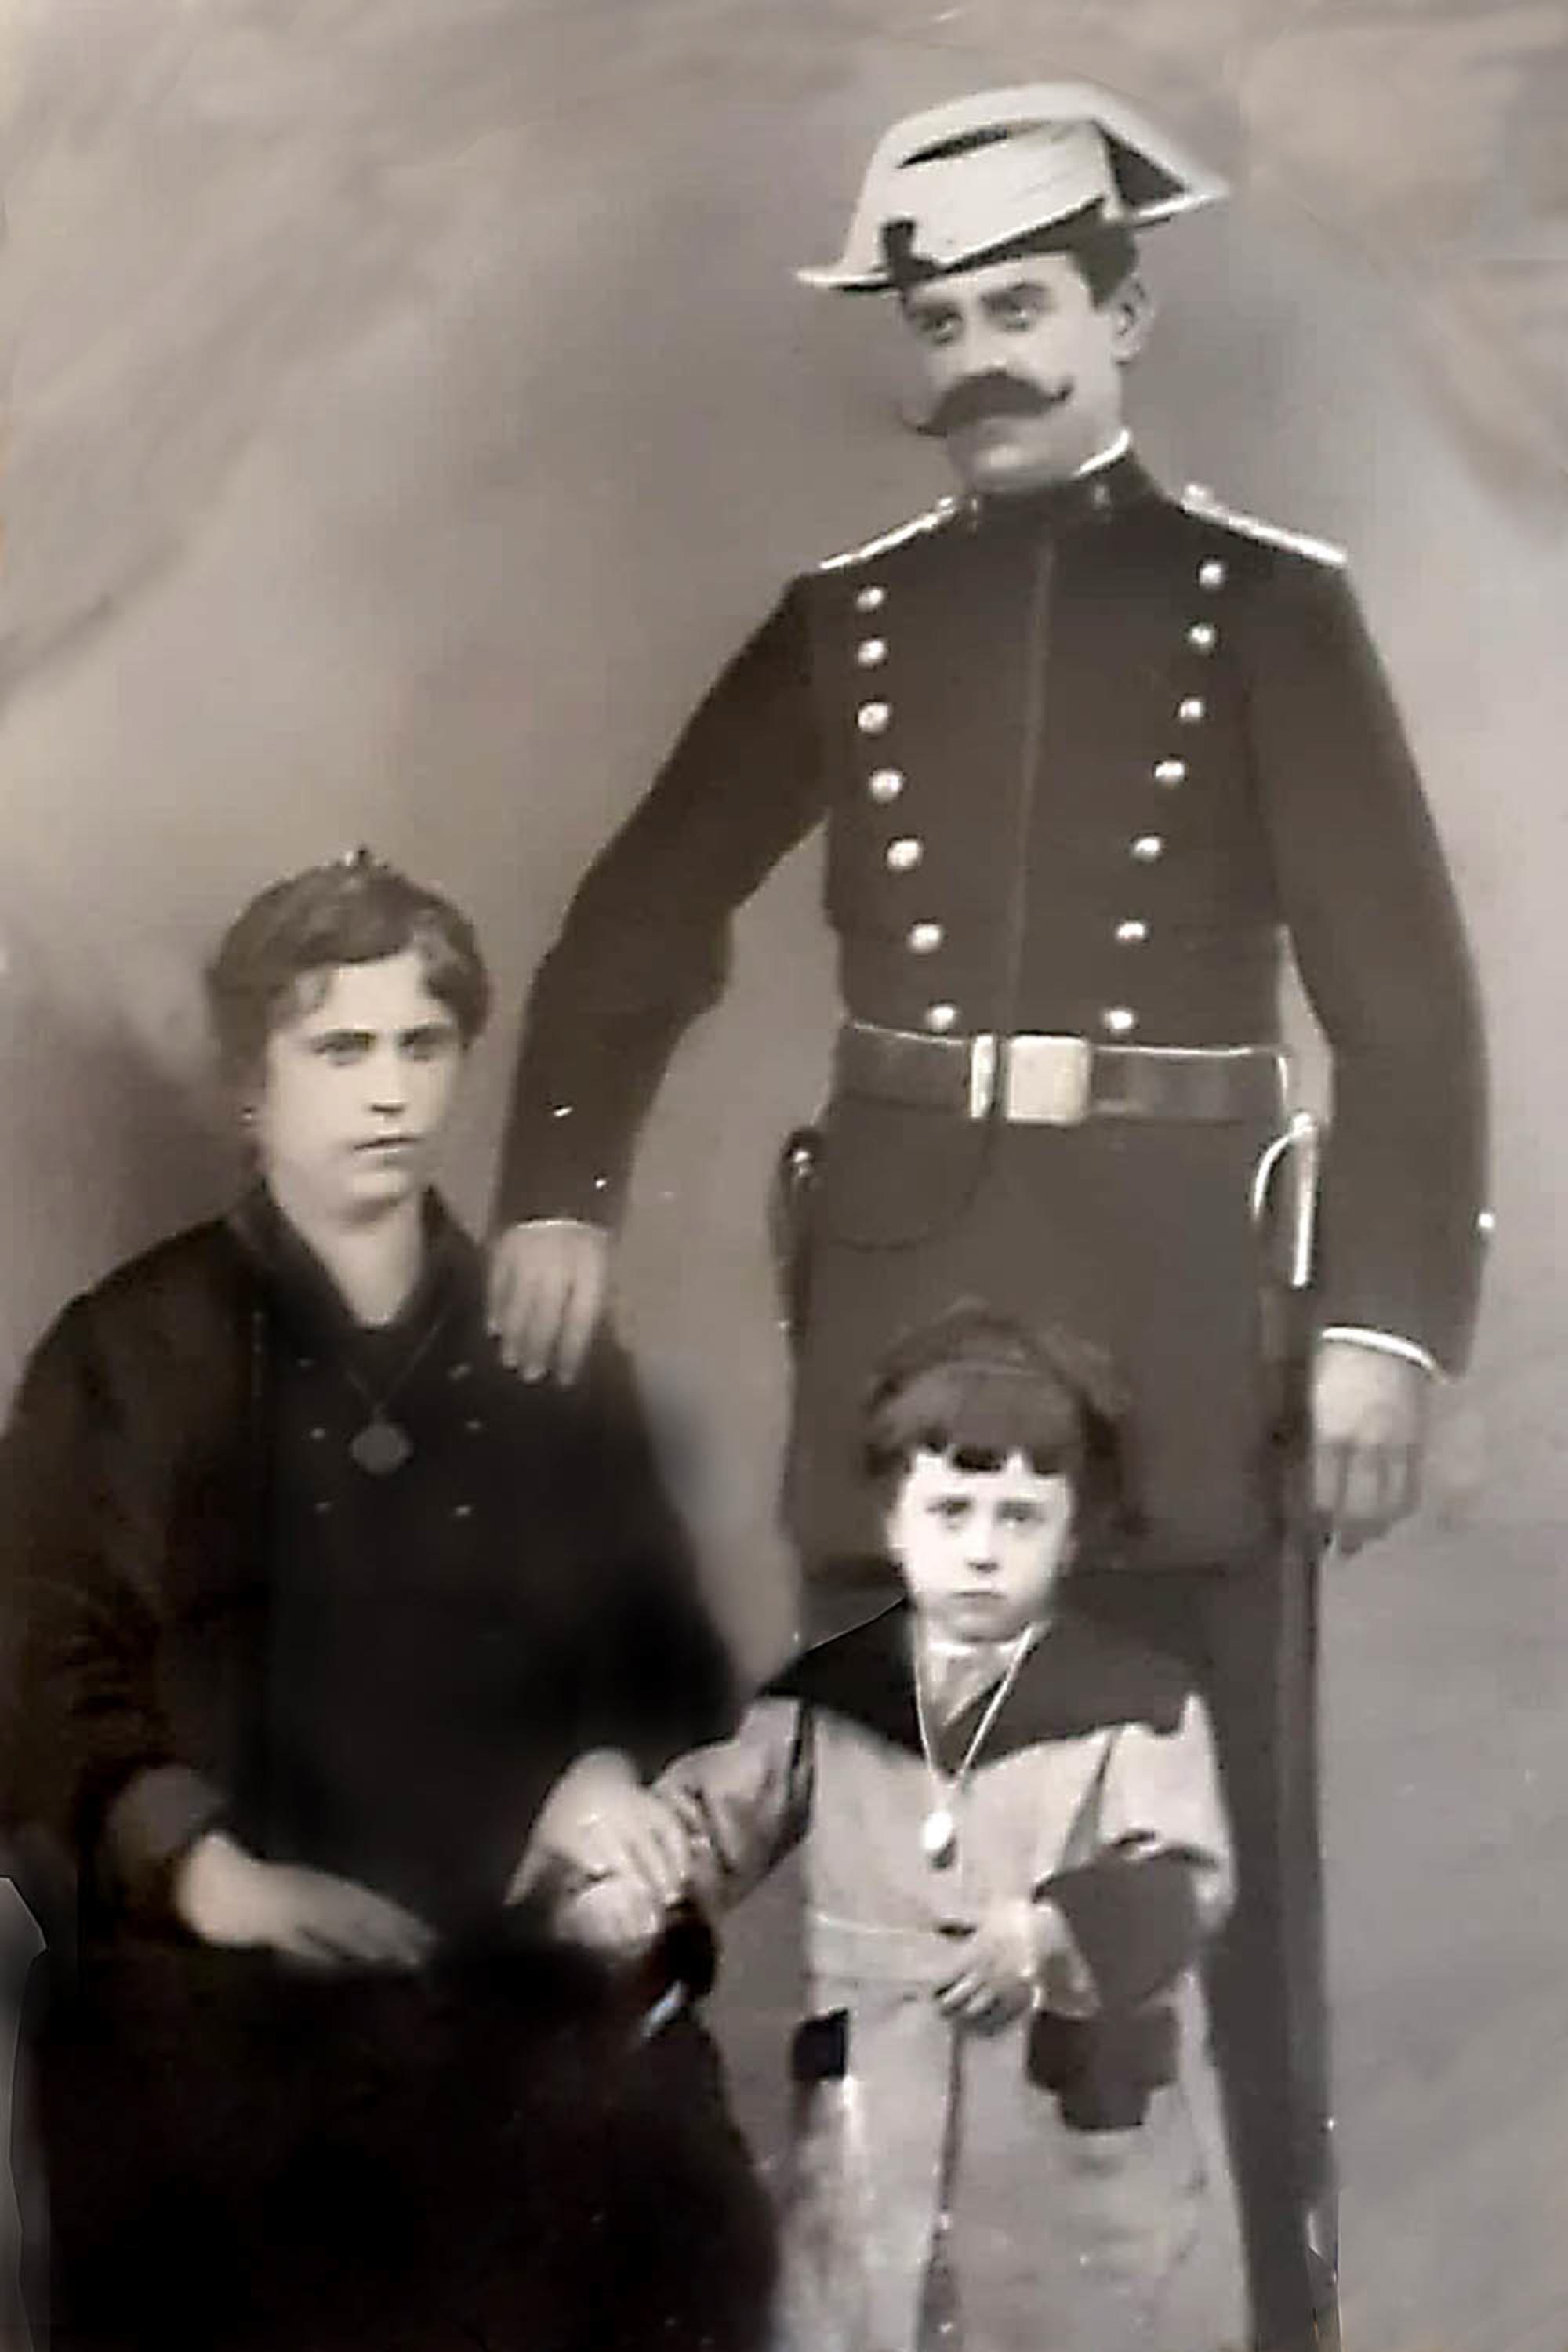  Juan Dionisio Sanz, Ana María González y su hija Juana. / Archivo familiar.